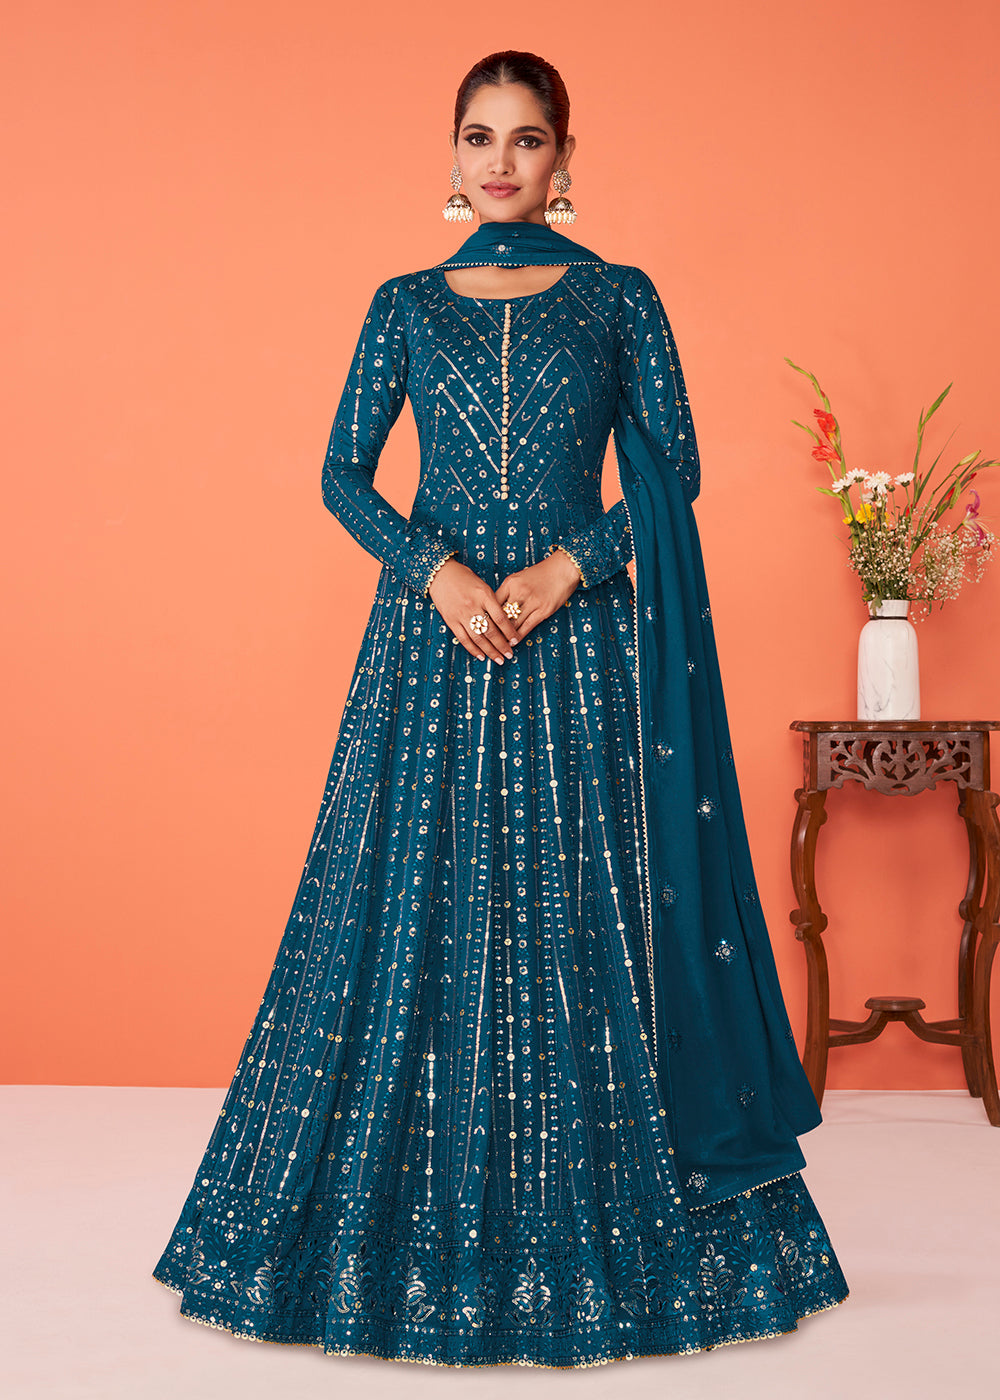 Shop Now Vivacious Teal Blue Georgette Festive Anarkali Suit Online featuring Vartika SIngh at Empress Clothing in USA.